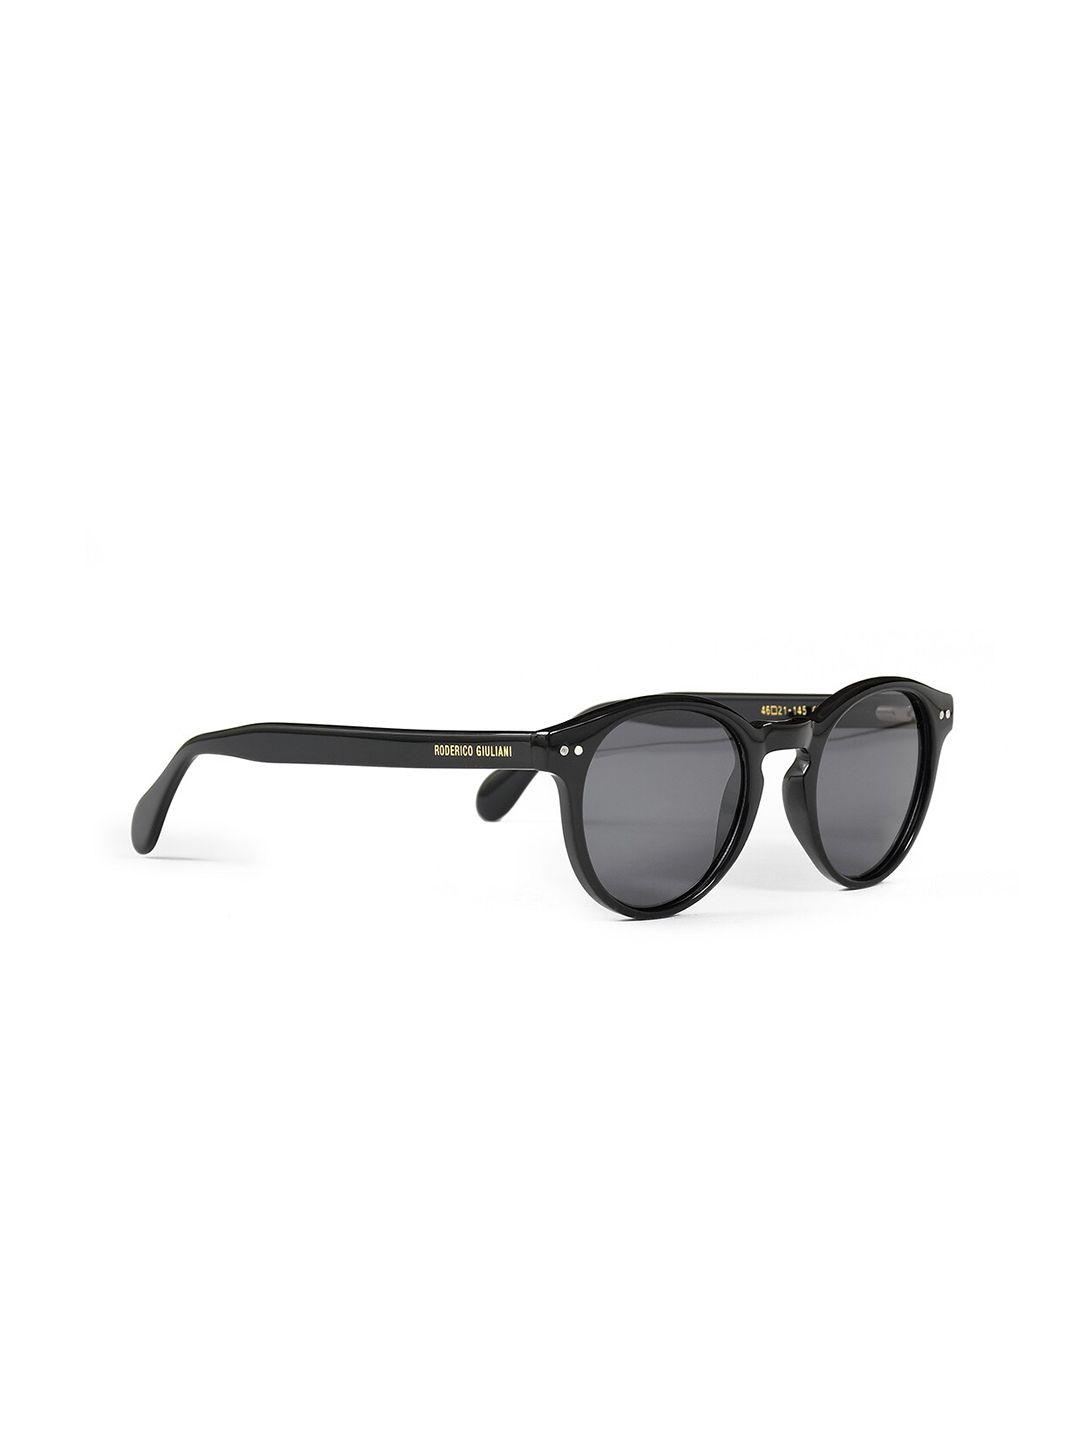 roderico giuliani round sunglasses with polarised & uv protected lens